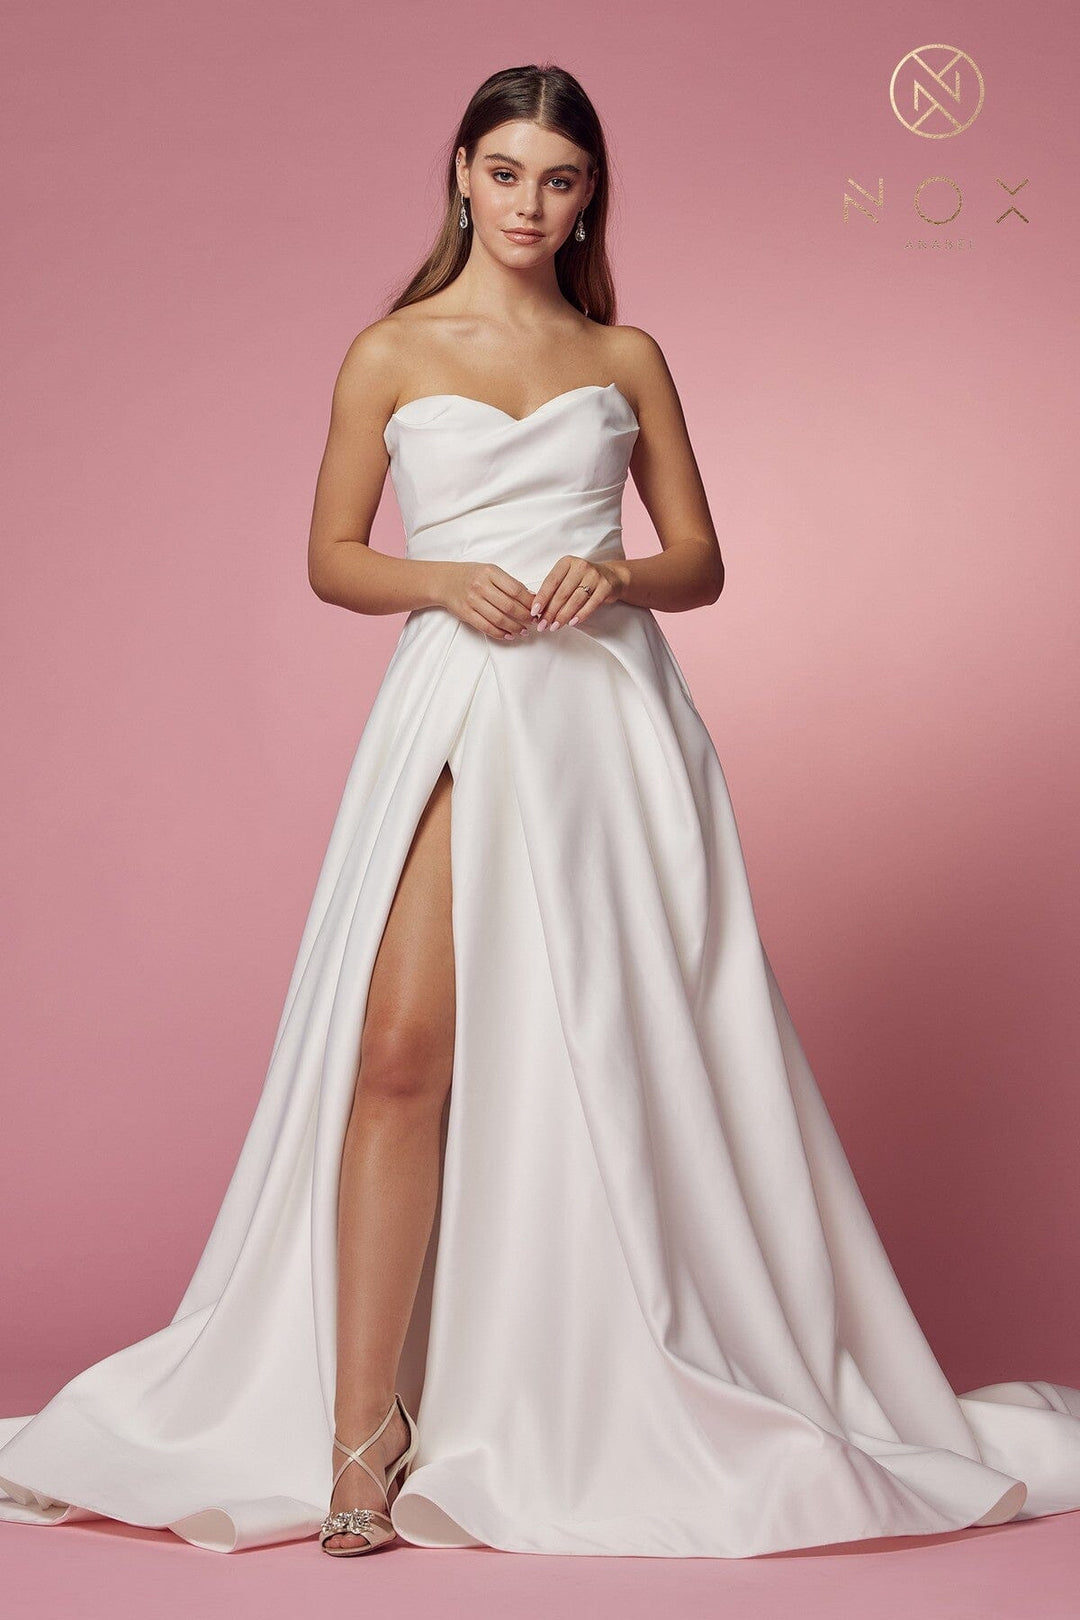 Strapless A-line Wedding Slit Gown by Nox Anabel JW938